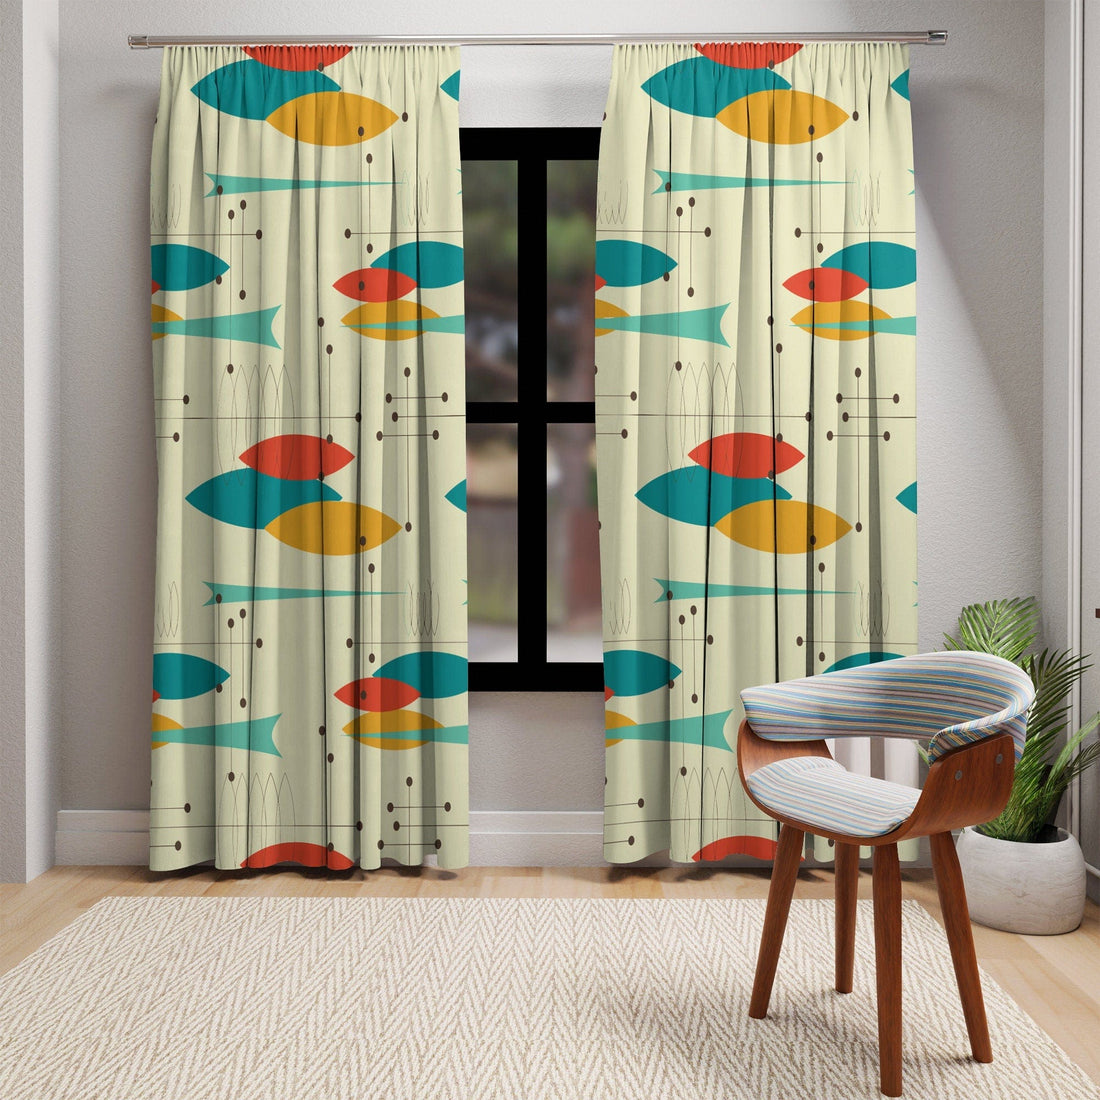 Kate McEnroe New York Mid Century Modern Geometric Pattern Curtains - Retro Atomic Style Starburst Prints in Orange, Aqua, Mustard and TealWindow CurtainsW30S - FIS - CRE - SH6